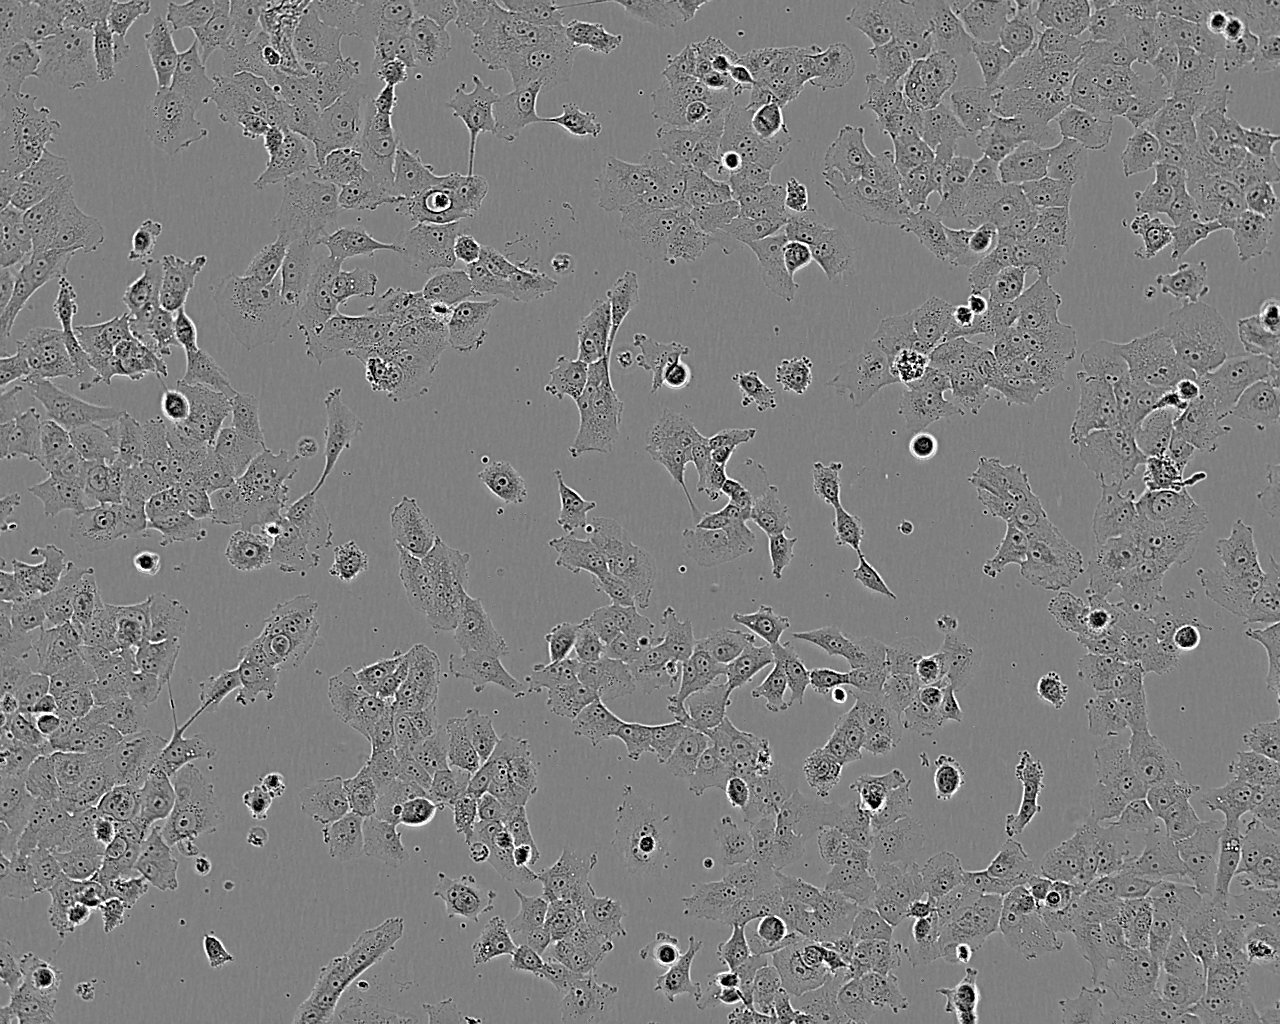 NCI-H1688 cell line人肺癌细胞系,NCI-H1688 cell line